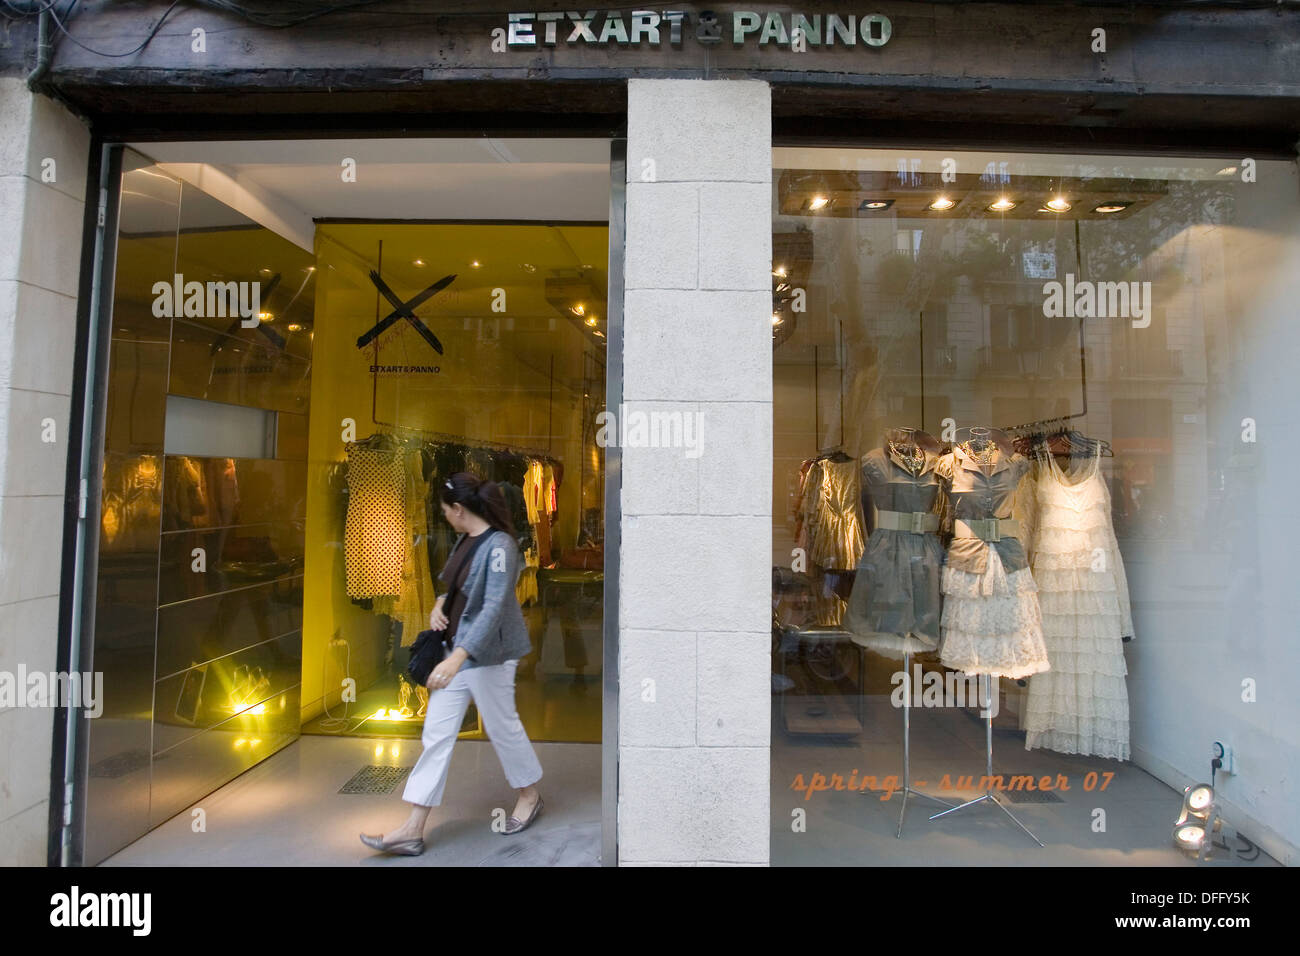 Etxart and Panno´ shop. Barcelona. Catalonia, Spain Stock Photo - Alamy